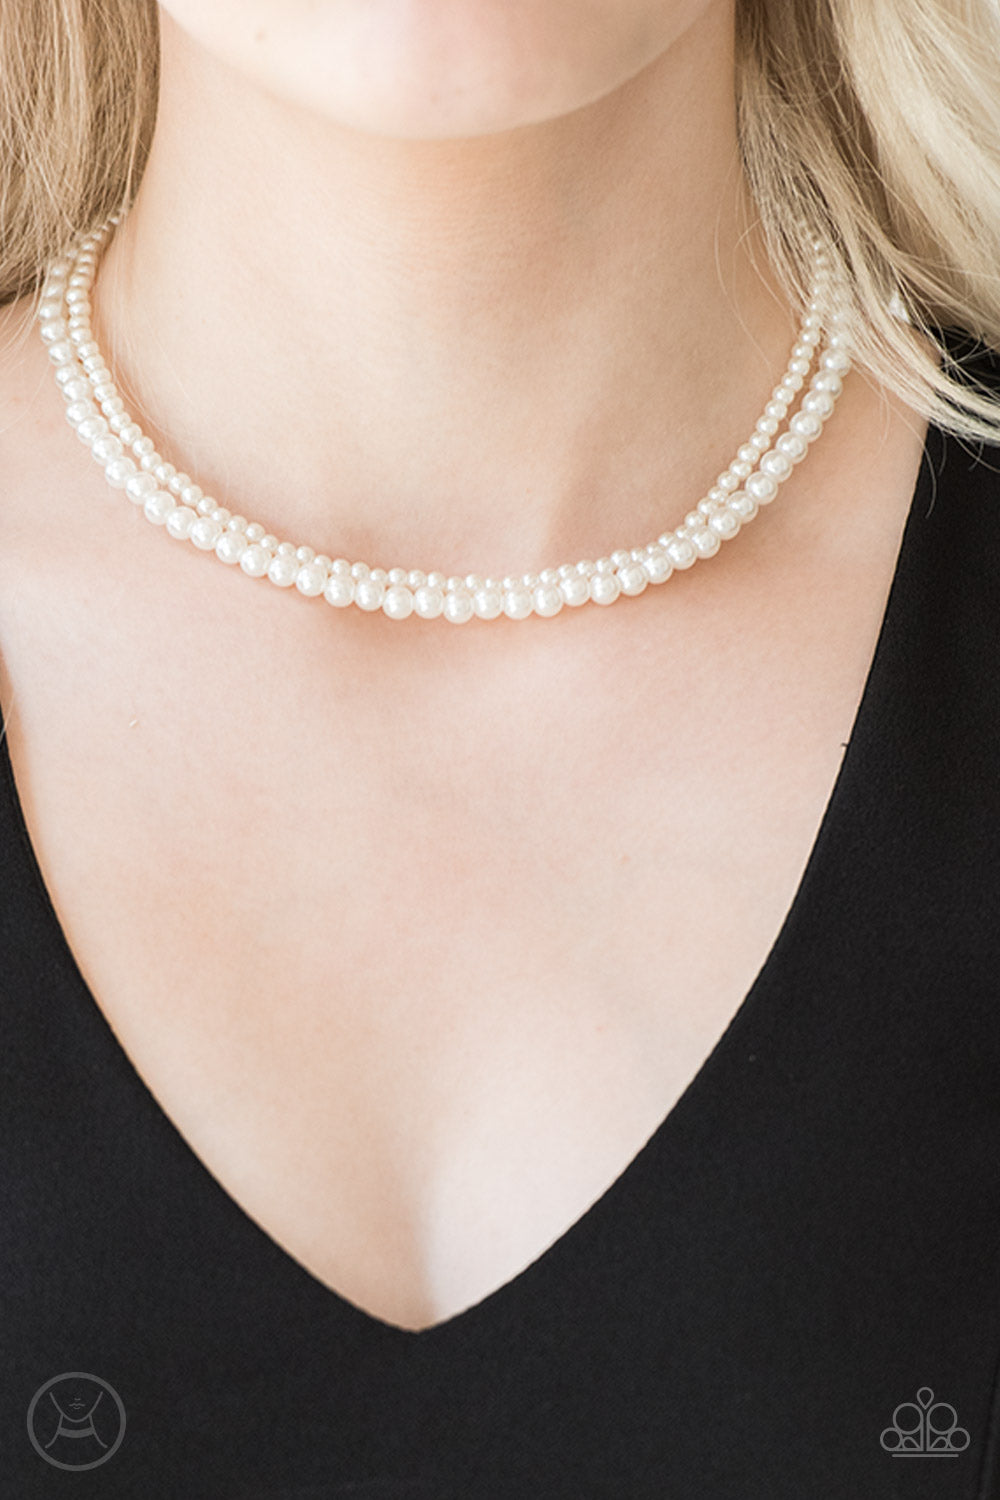 Ladies Choice - White choker necklace